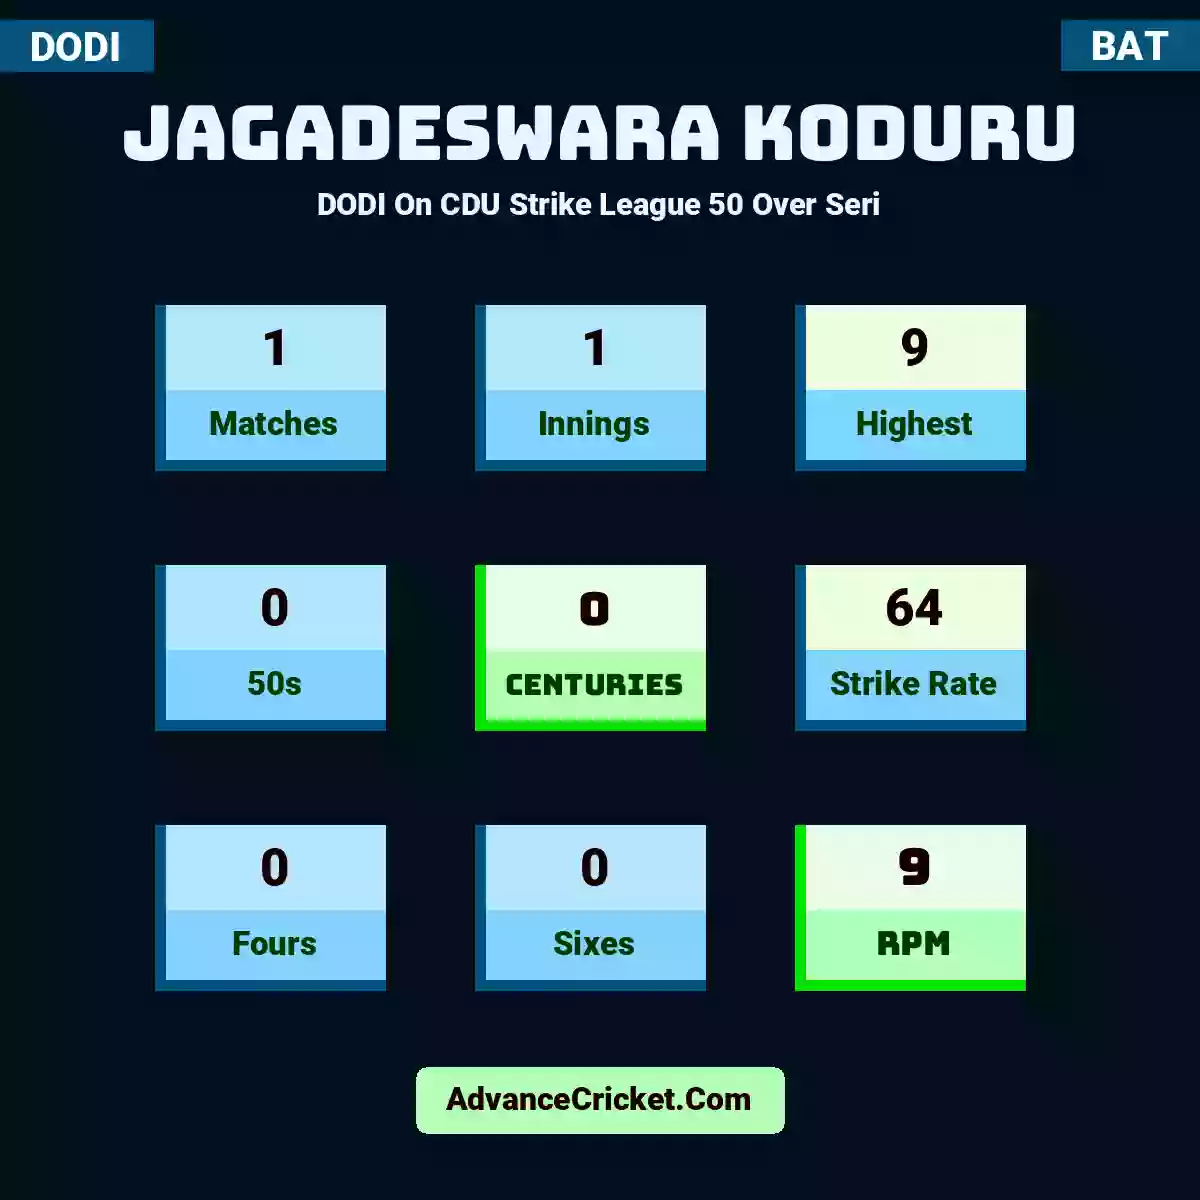 Jagadeswara Koduru DODI  On CDU Strike League 50 Over Seri, Jagadeswara Koduru played 1 matches, scored 9 runs as highest, 0 half-centuries, and 0 centuries, with a strike rate of 64. J.Koduru hit 0 fours and 0 sixes, with an RPM of 9.